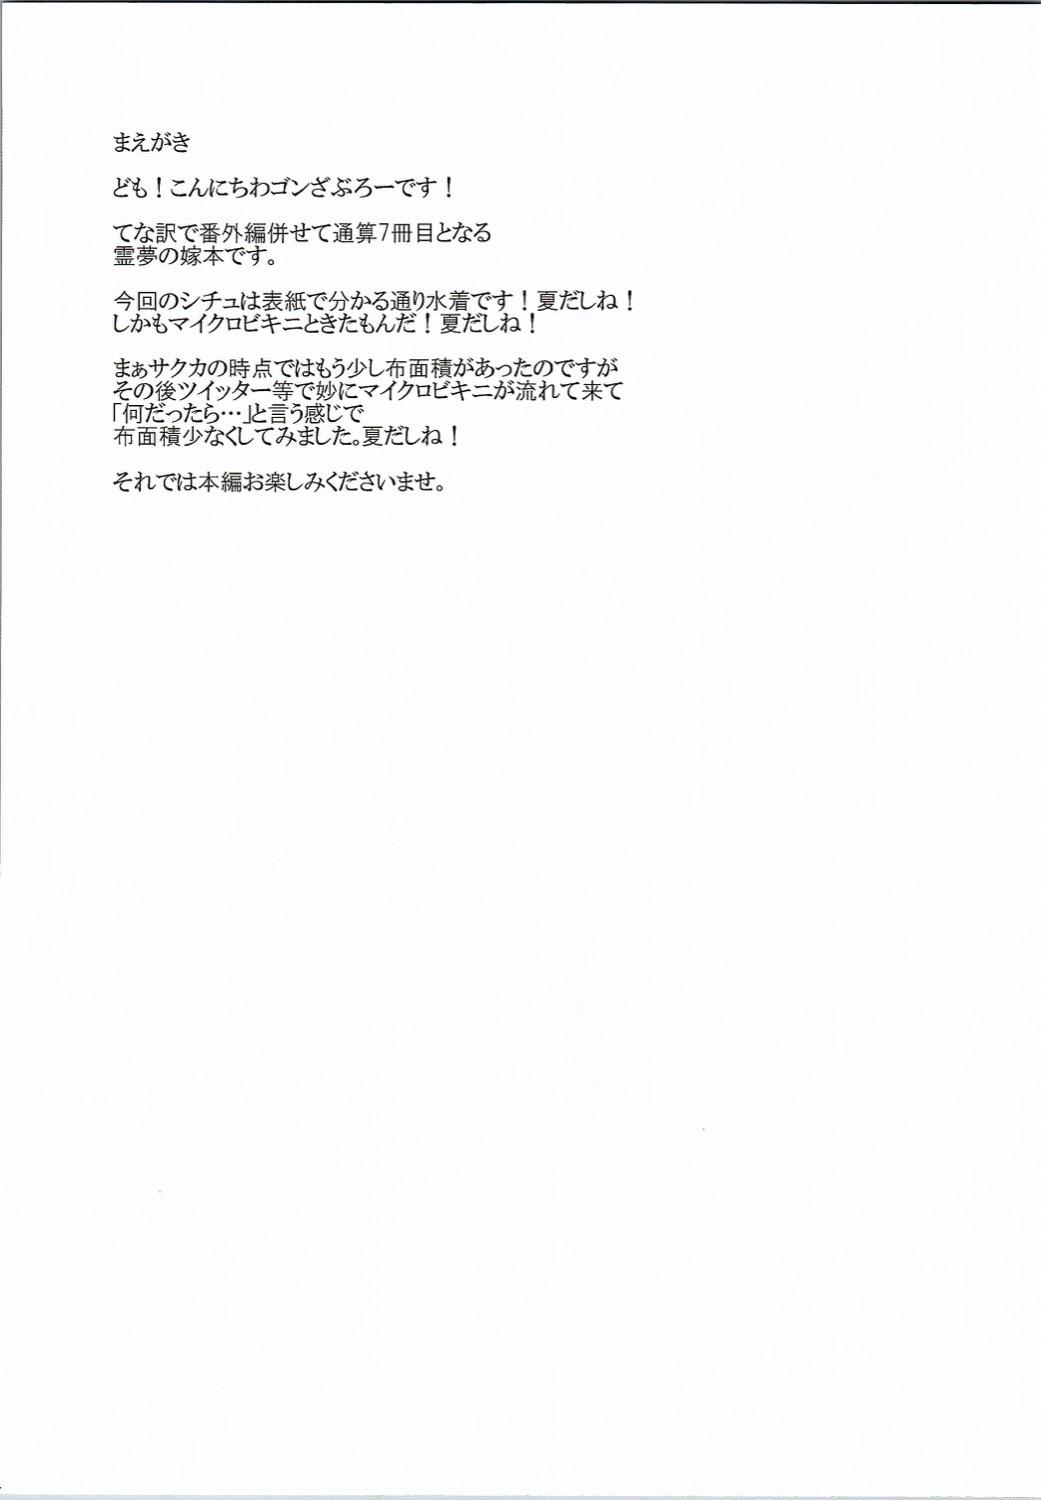 Fishnet Reimu ga Ore no Yome!! Roku - Touhou project Home - Page 3